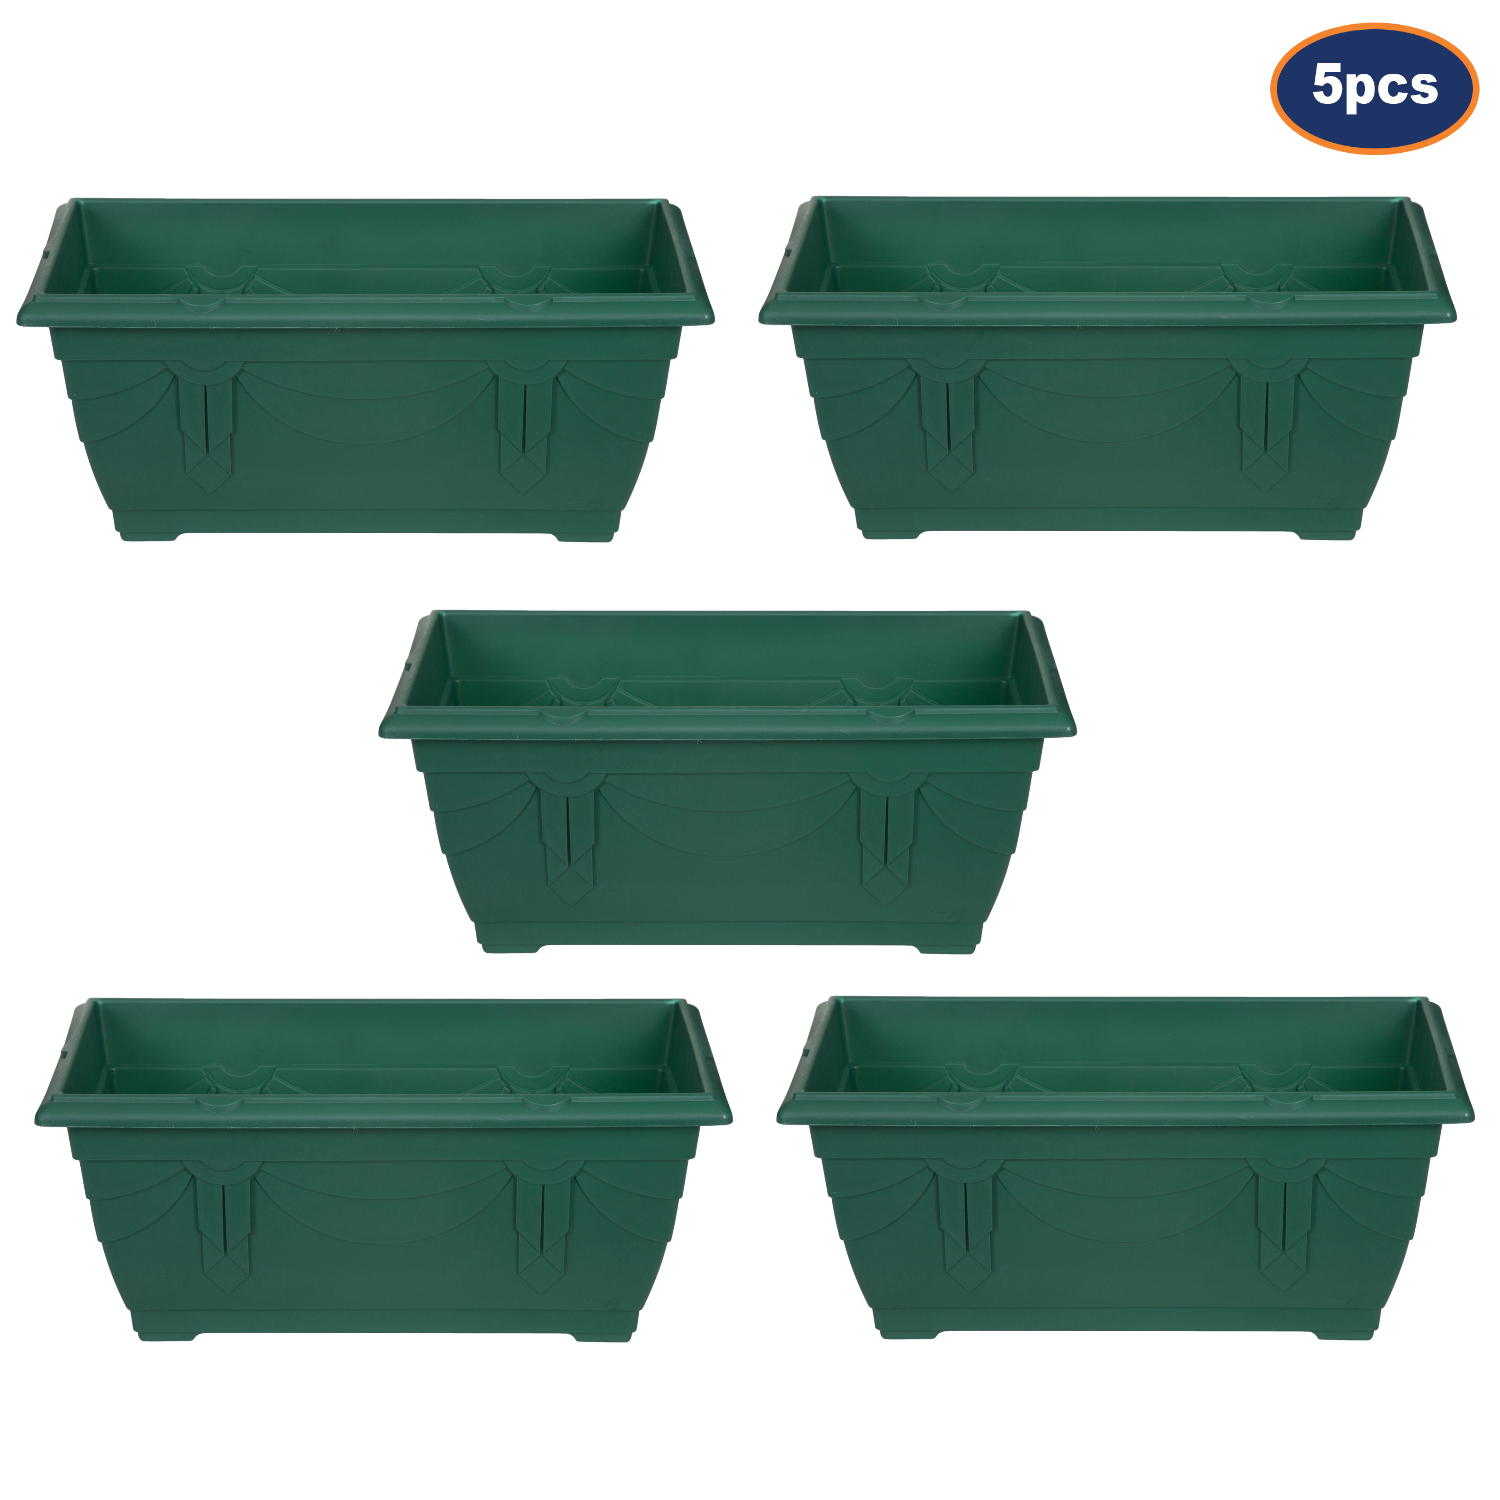 5pcs 40cm Window Green Box Planter Plastic